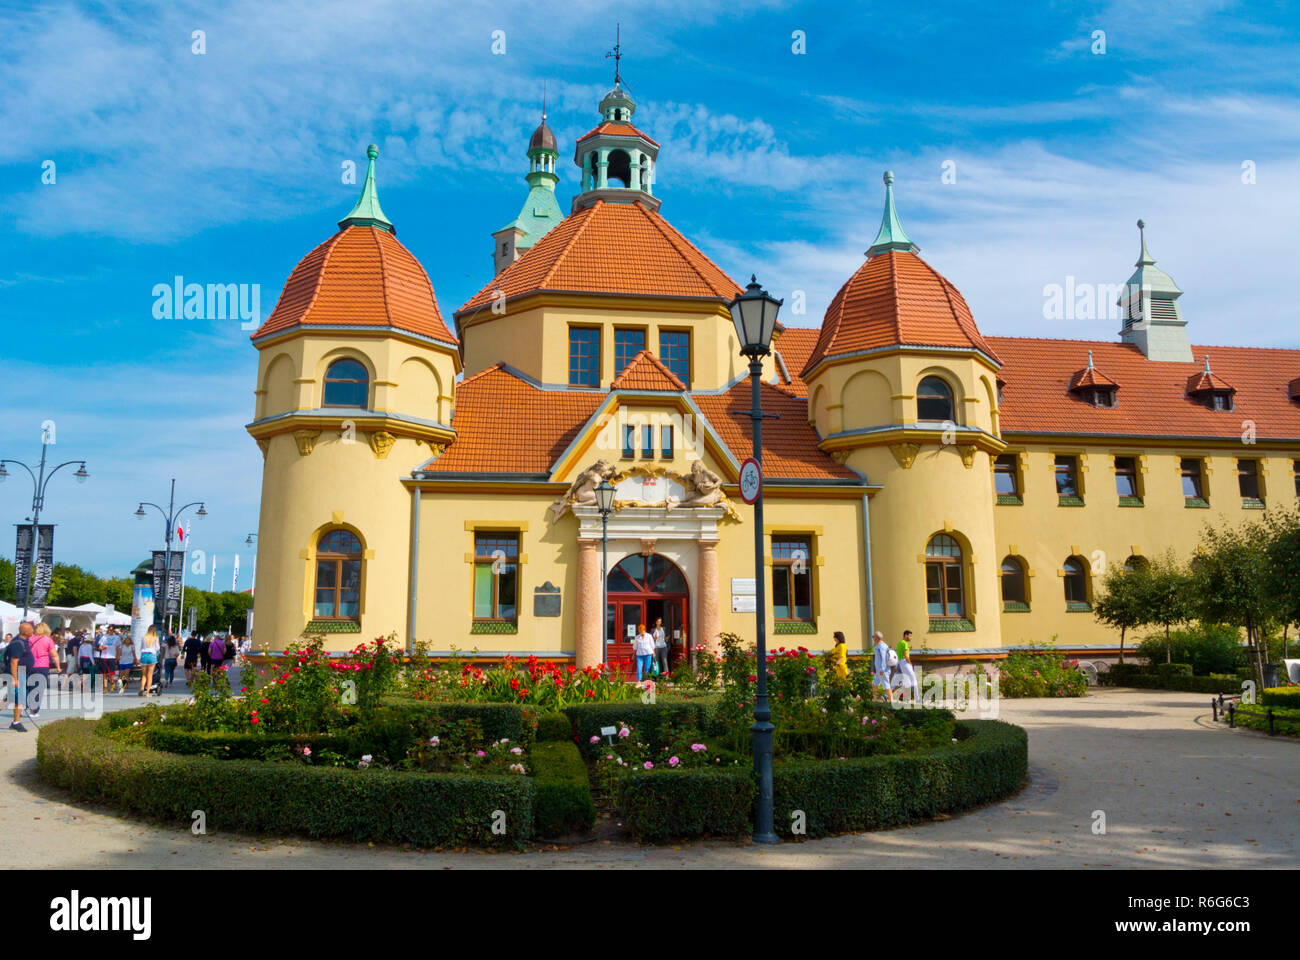 Balneology historical bath-house hospital building, Plac Zdrojowy, Sopot, Poland Stock Photo